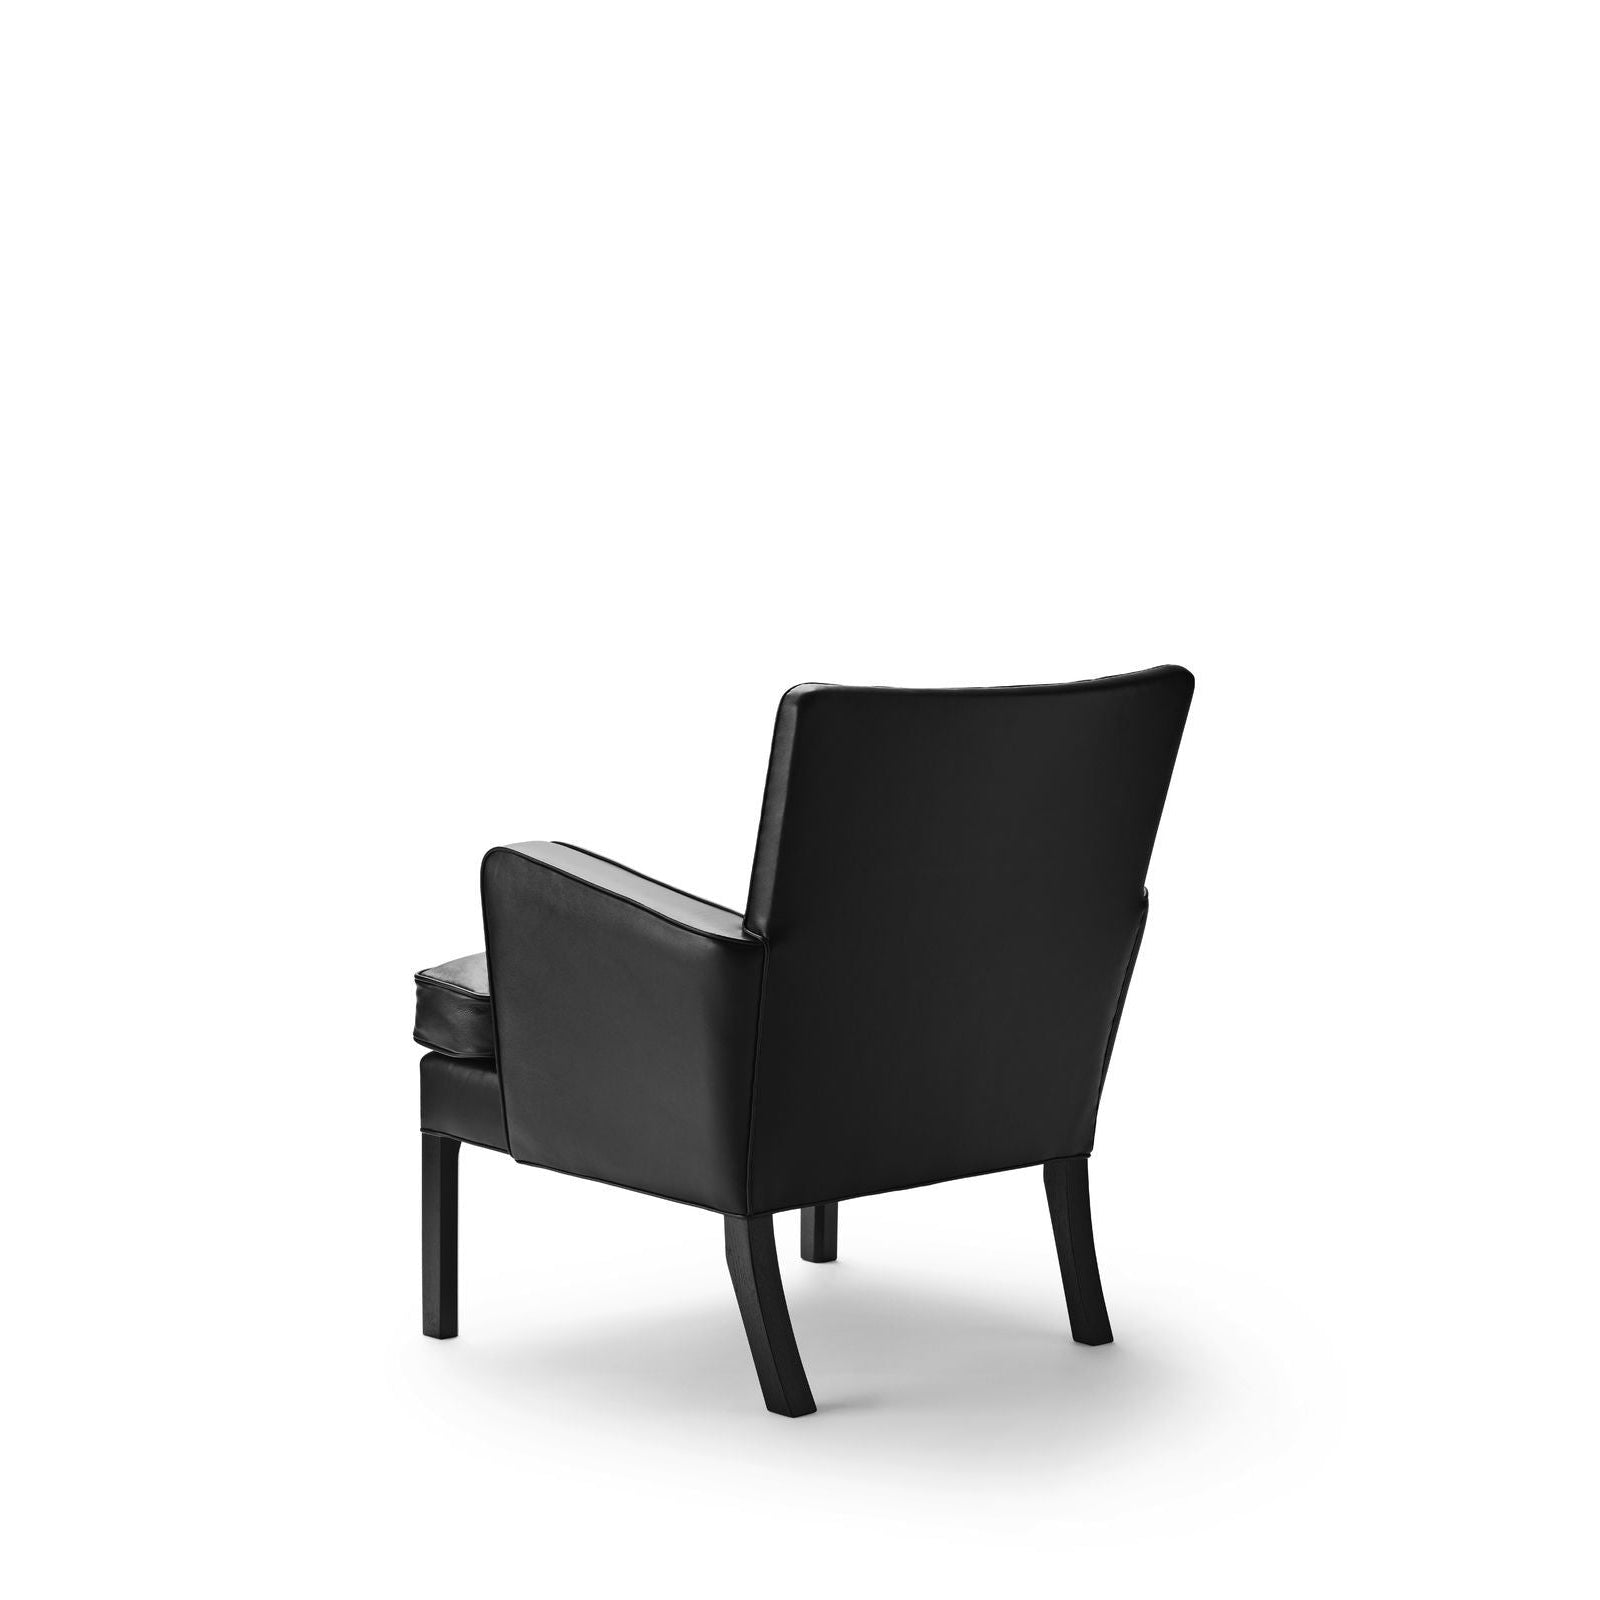 Carl Hansen KK53130 Lätt stol, svart ek/svart läder